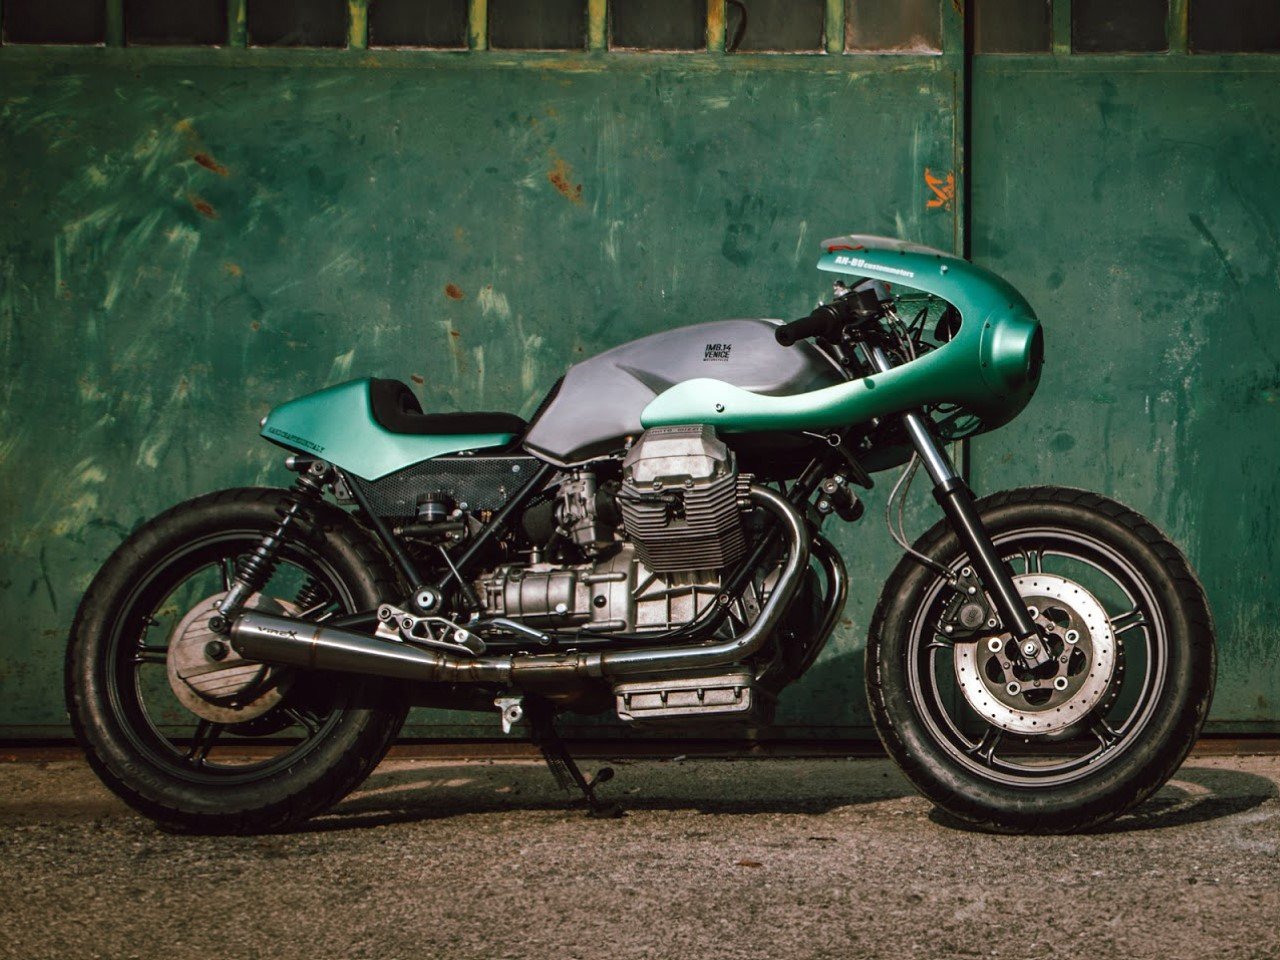 Italian-Japanese Collaboration Reimagines the Moto Guzzi SP3 as a Gorgeous Retro-Modern Cafe Racer